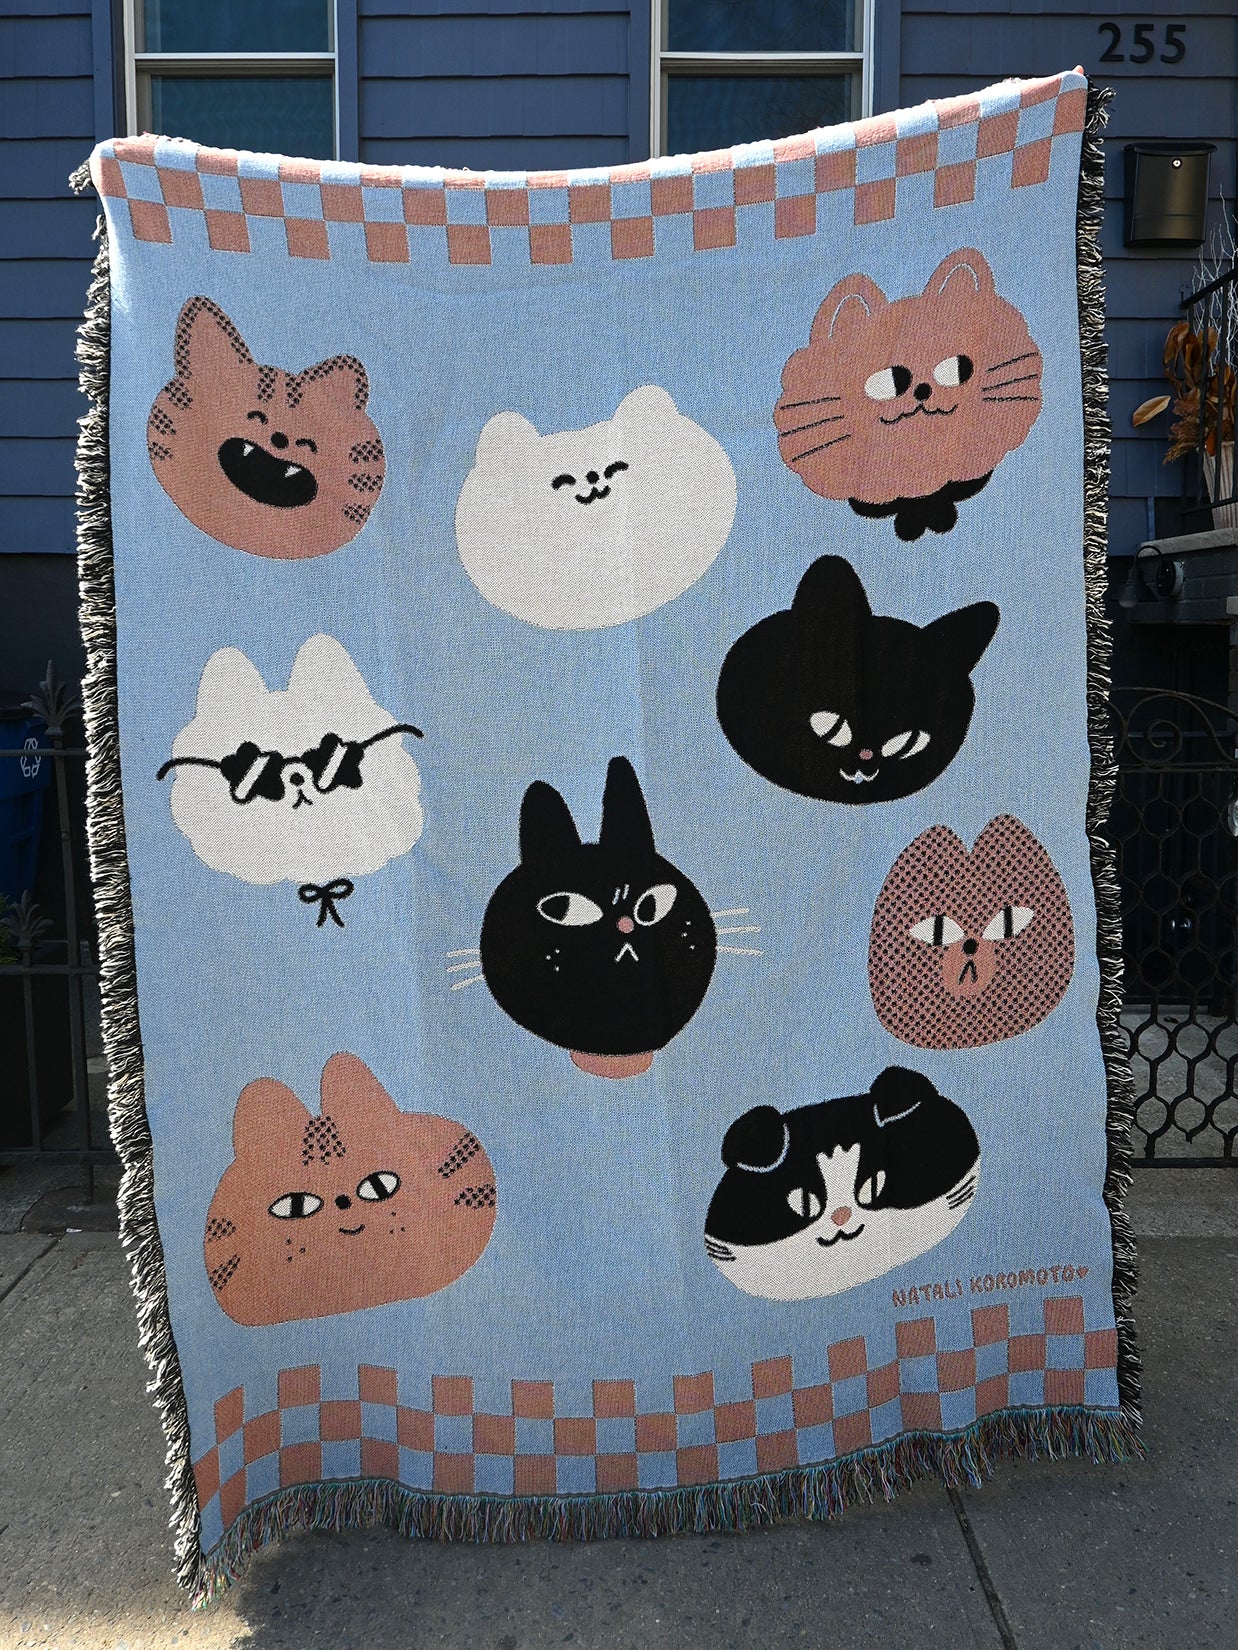 "CATS" Throw blanket design by illustrator Natali Koromoto Martinez.